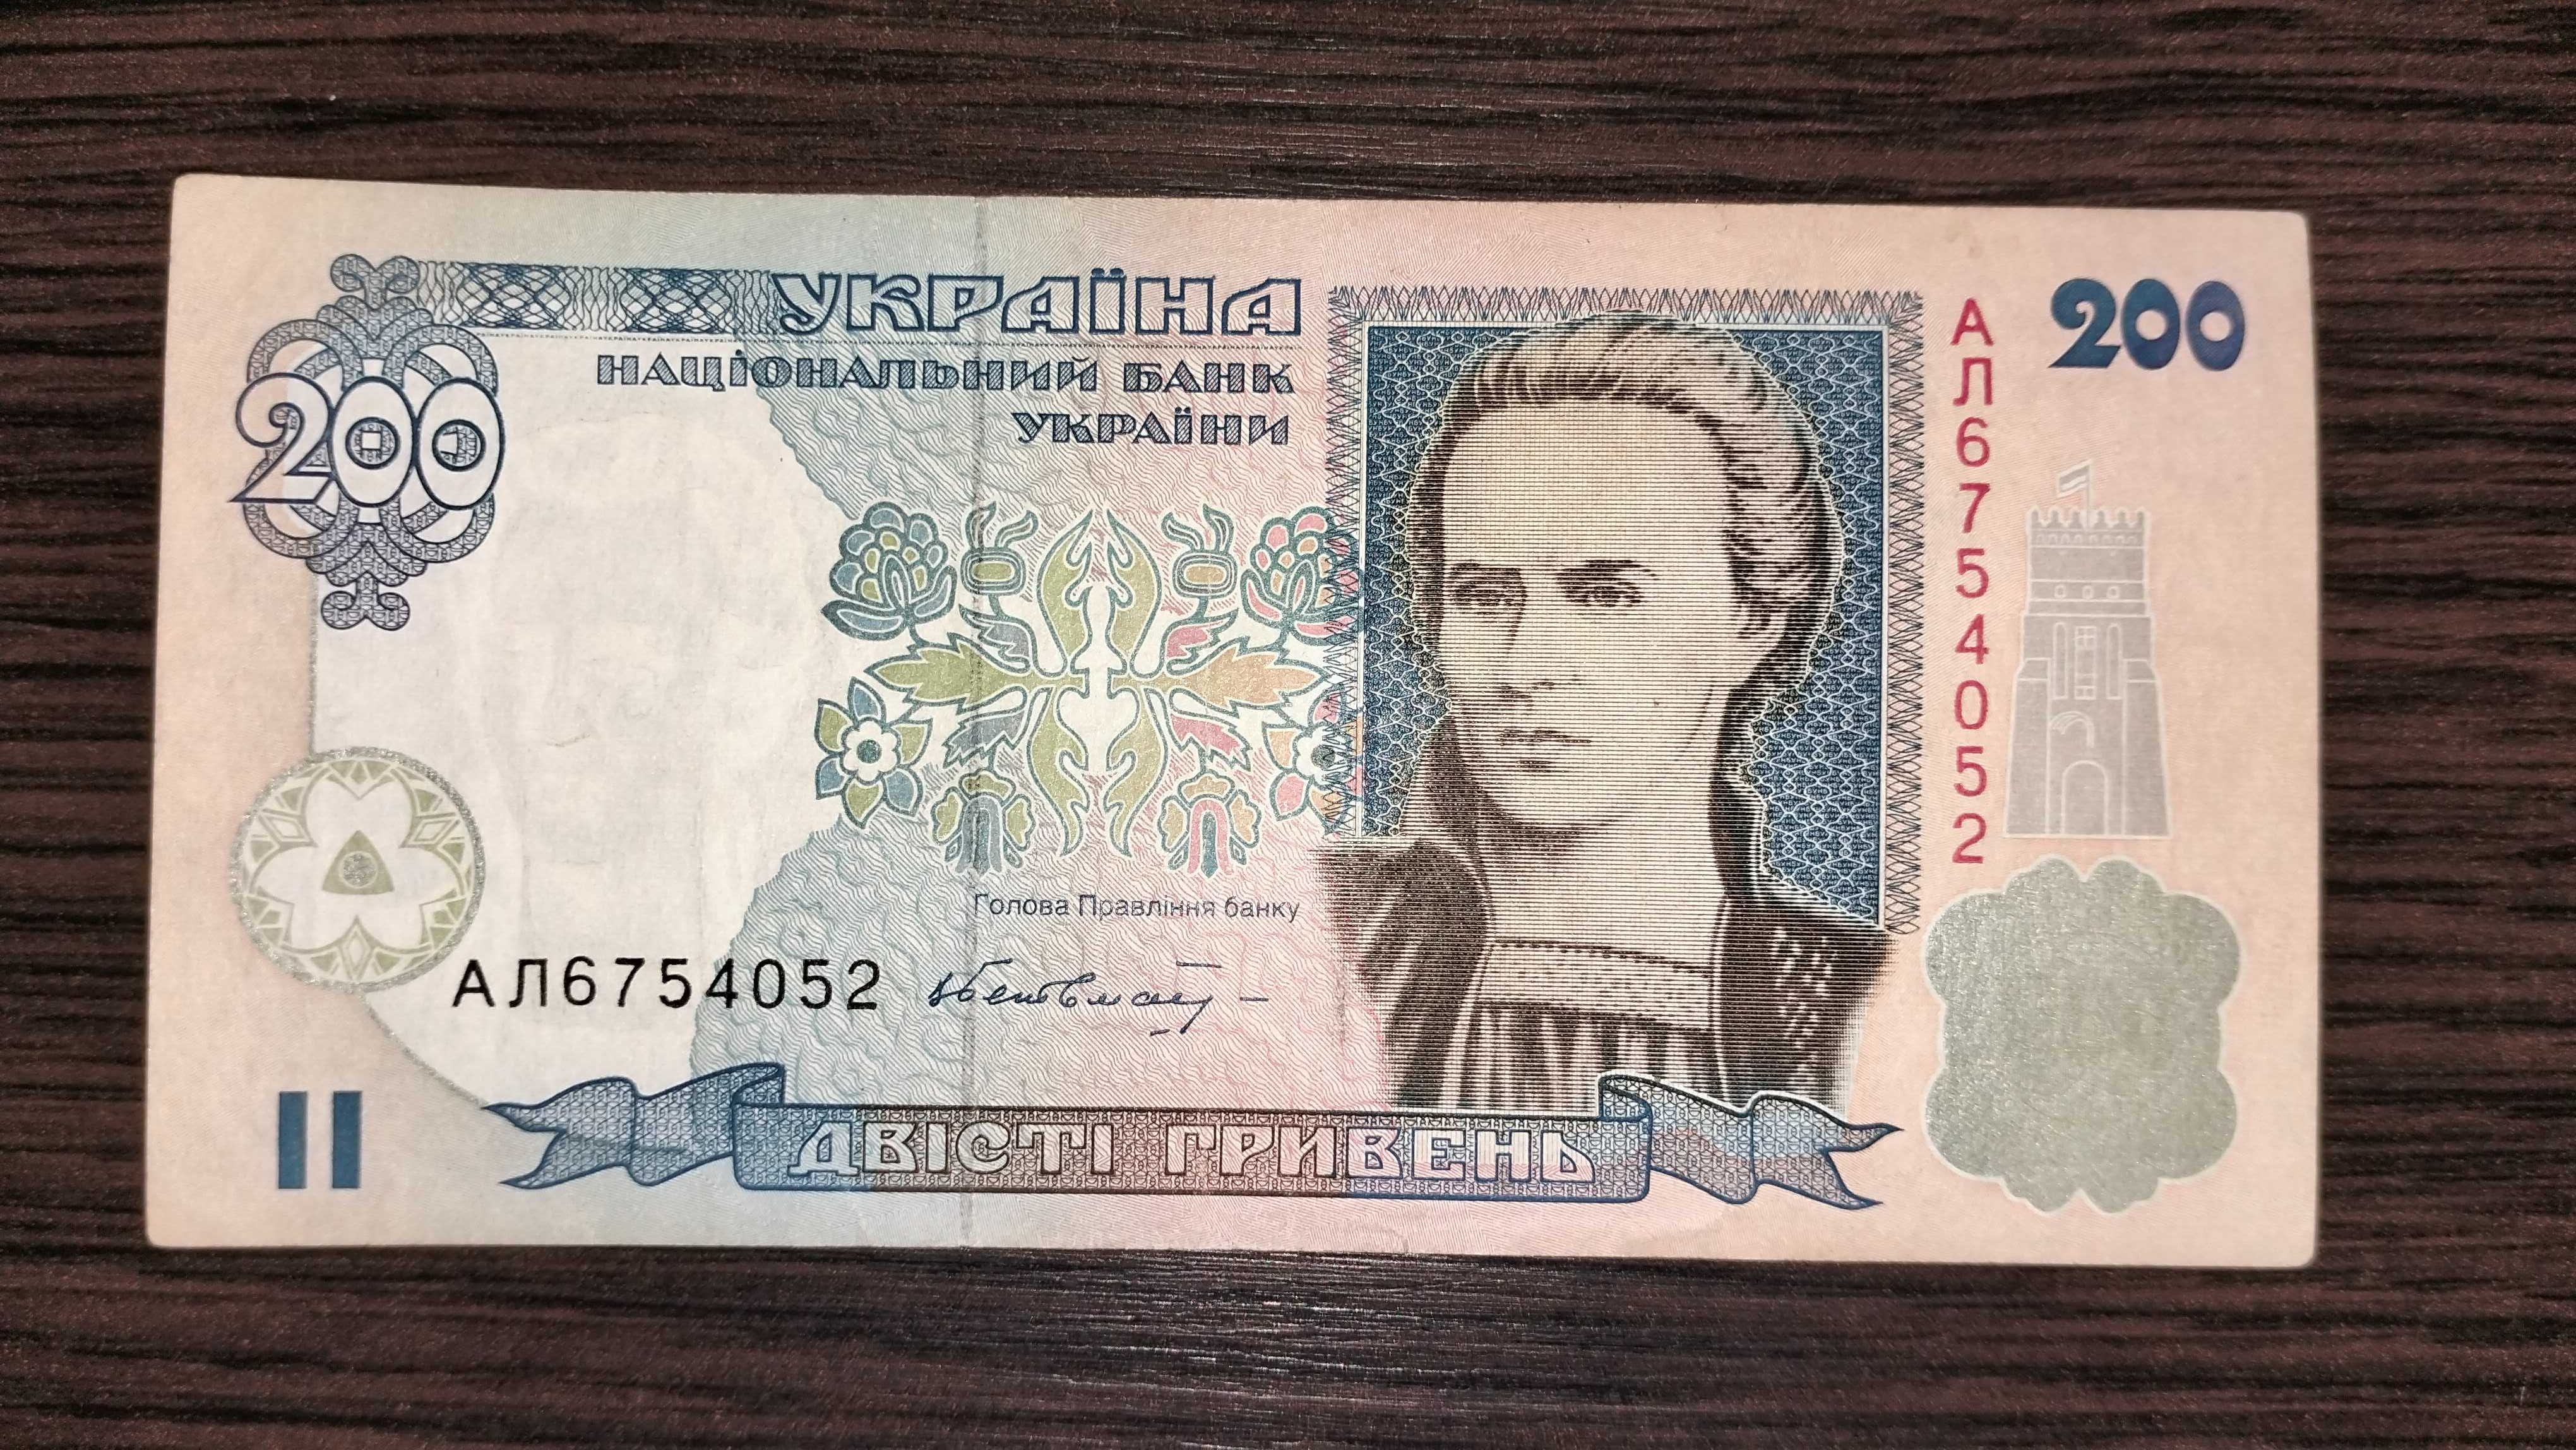 200 грн. гривень / гривен старого зразка Гетьман